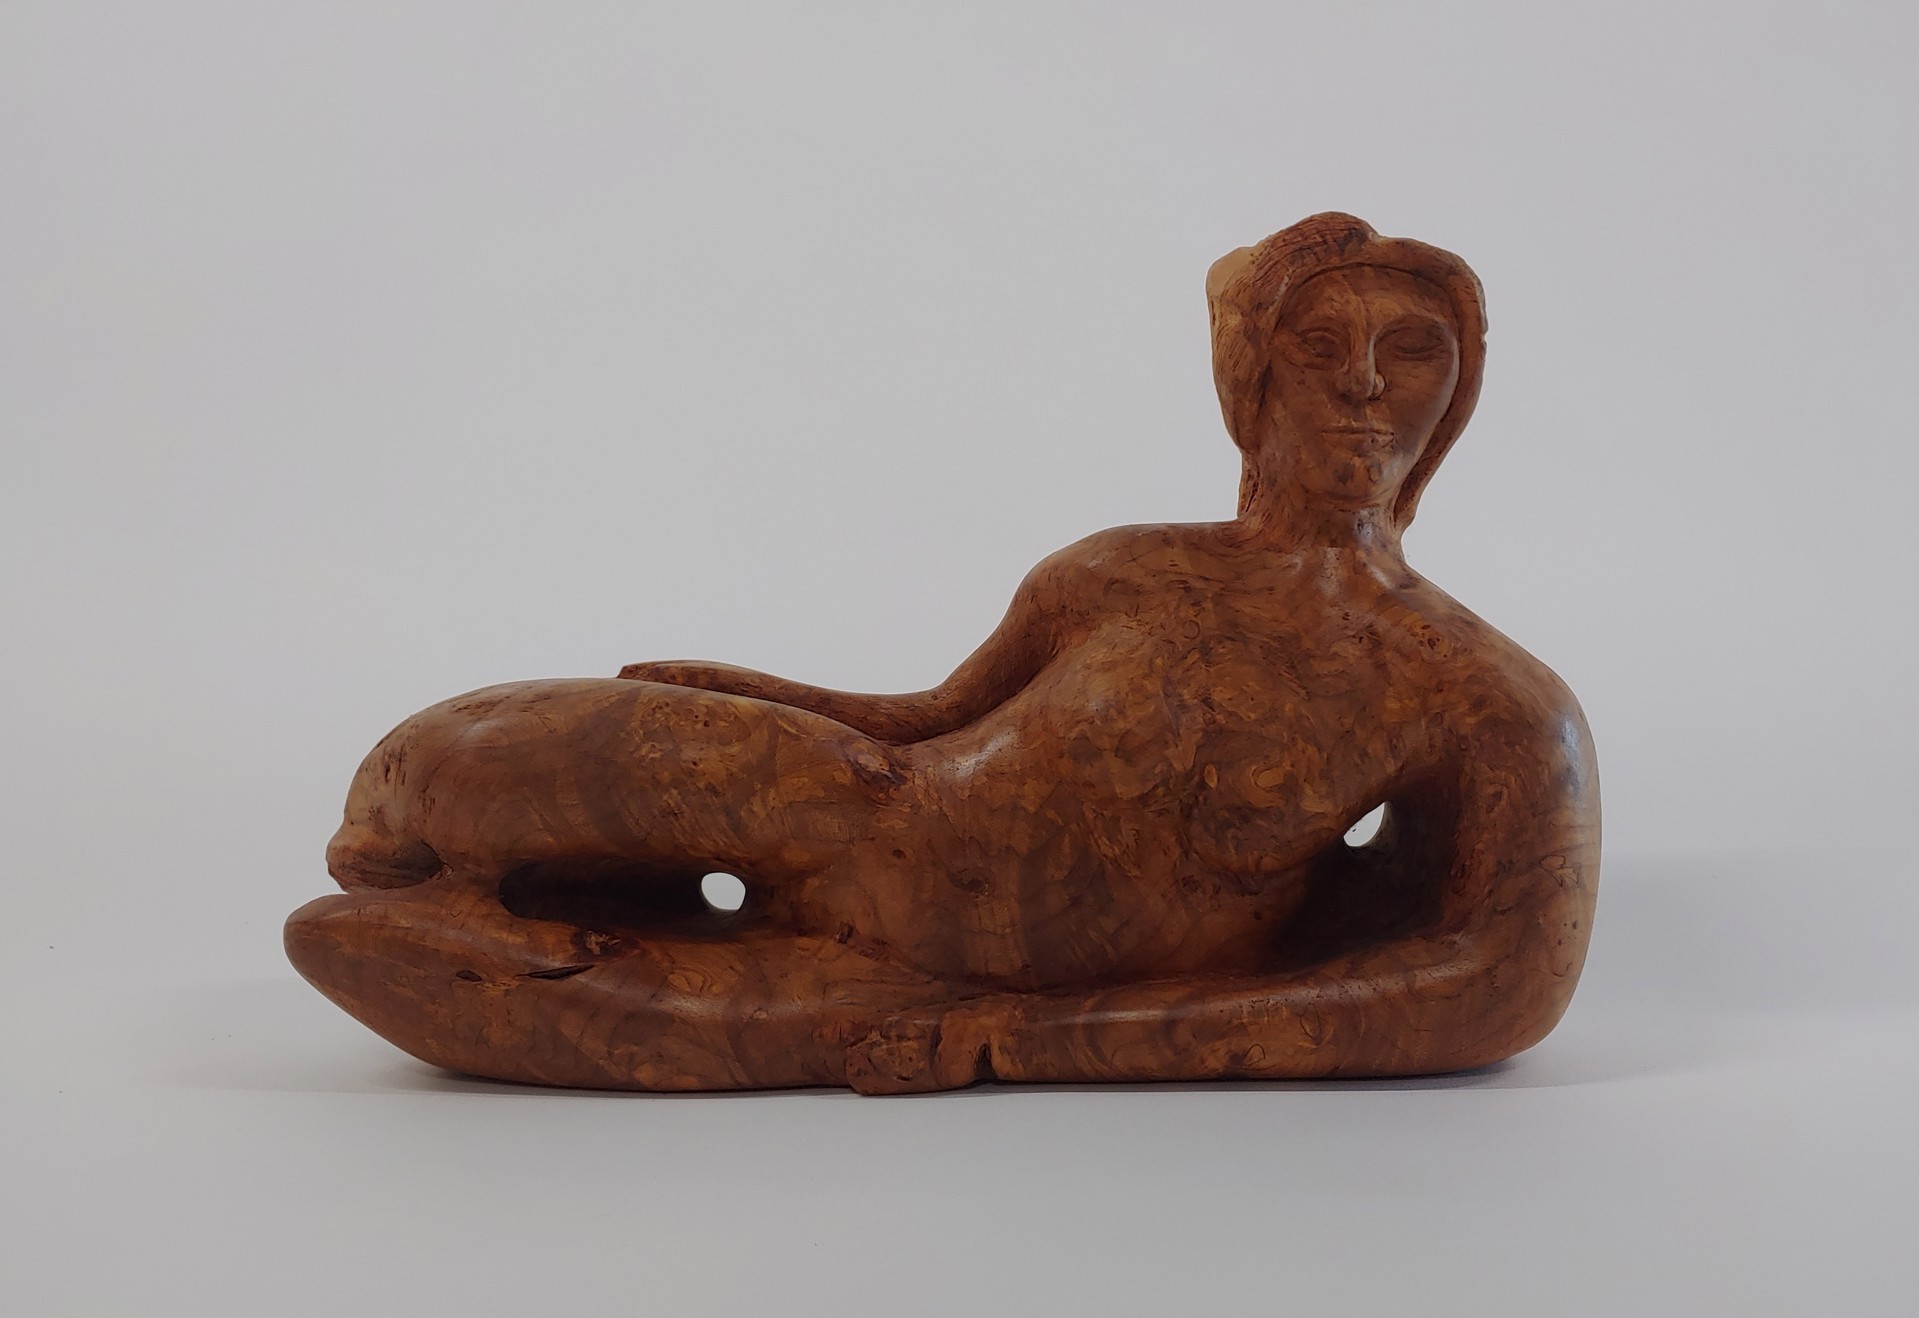 Reclining Nude #2 - Wood Sculpture by David Amdur